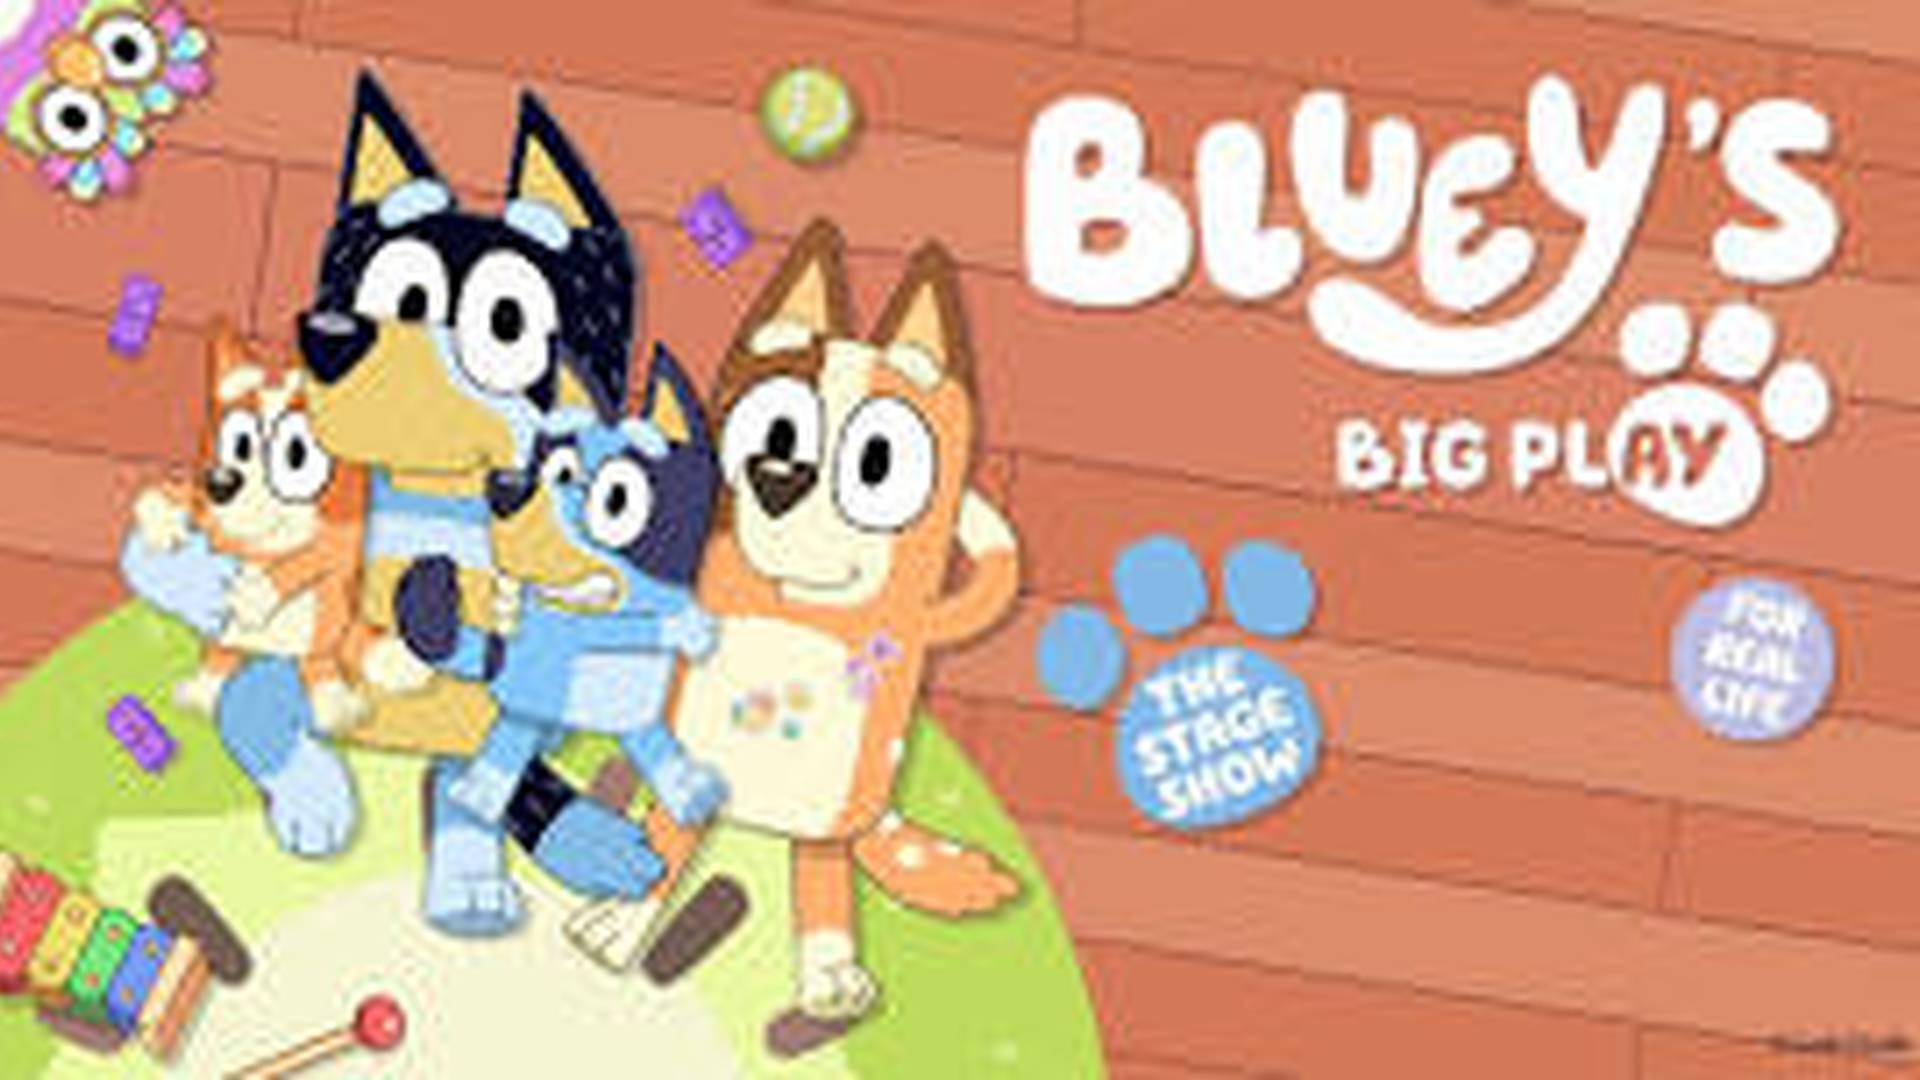 Bluey's Big Play photo